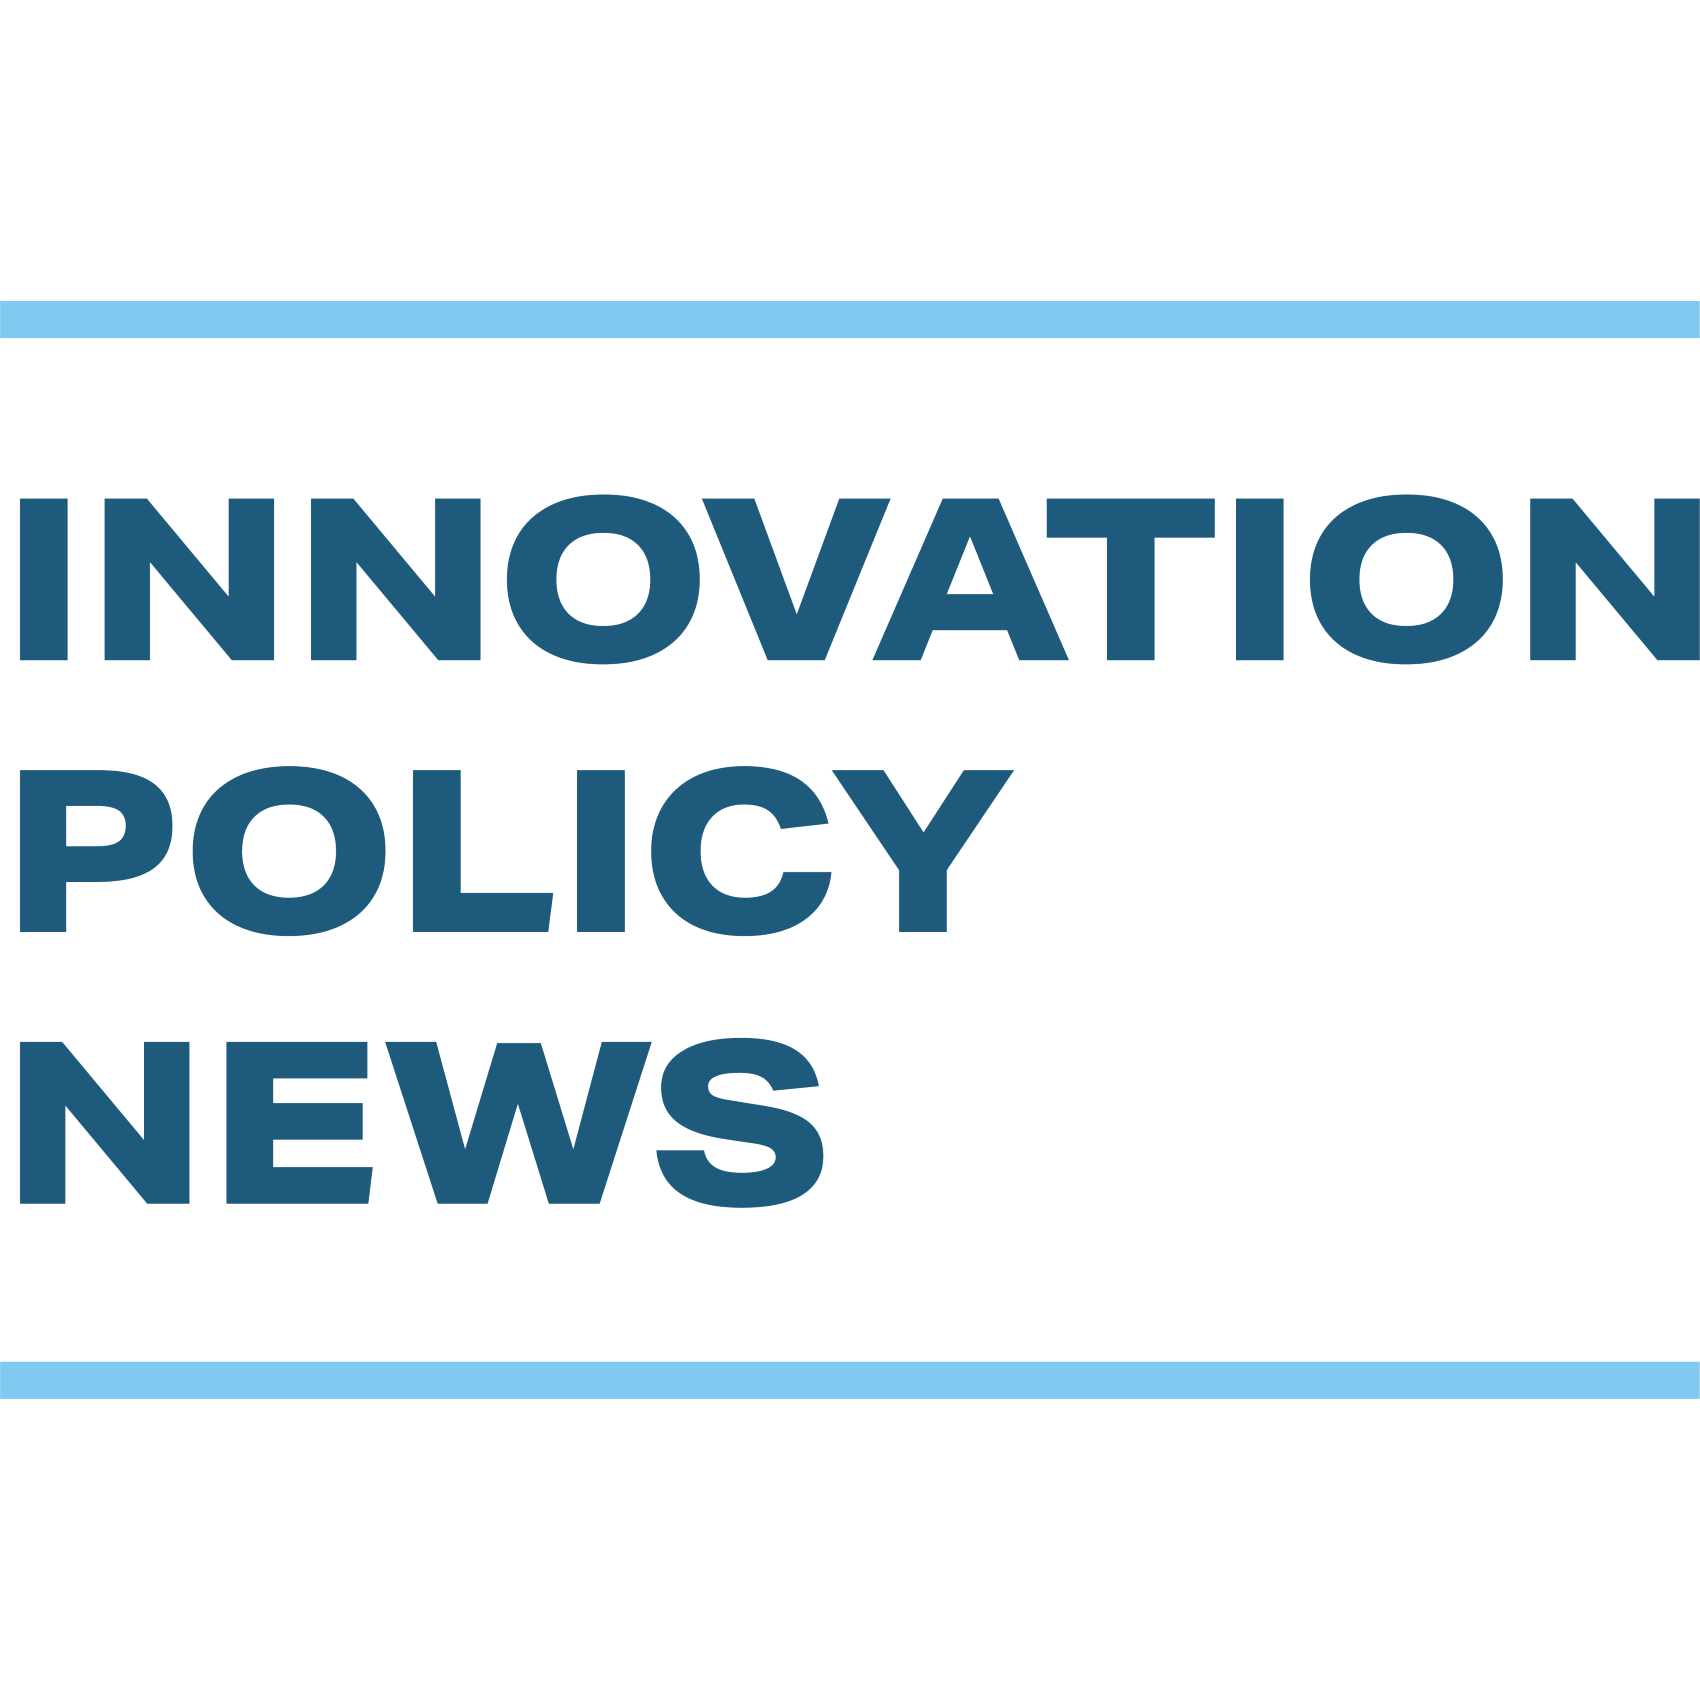 (c) Innovationpolicy.org